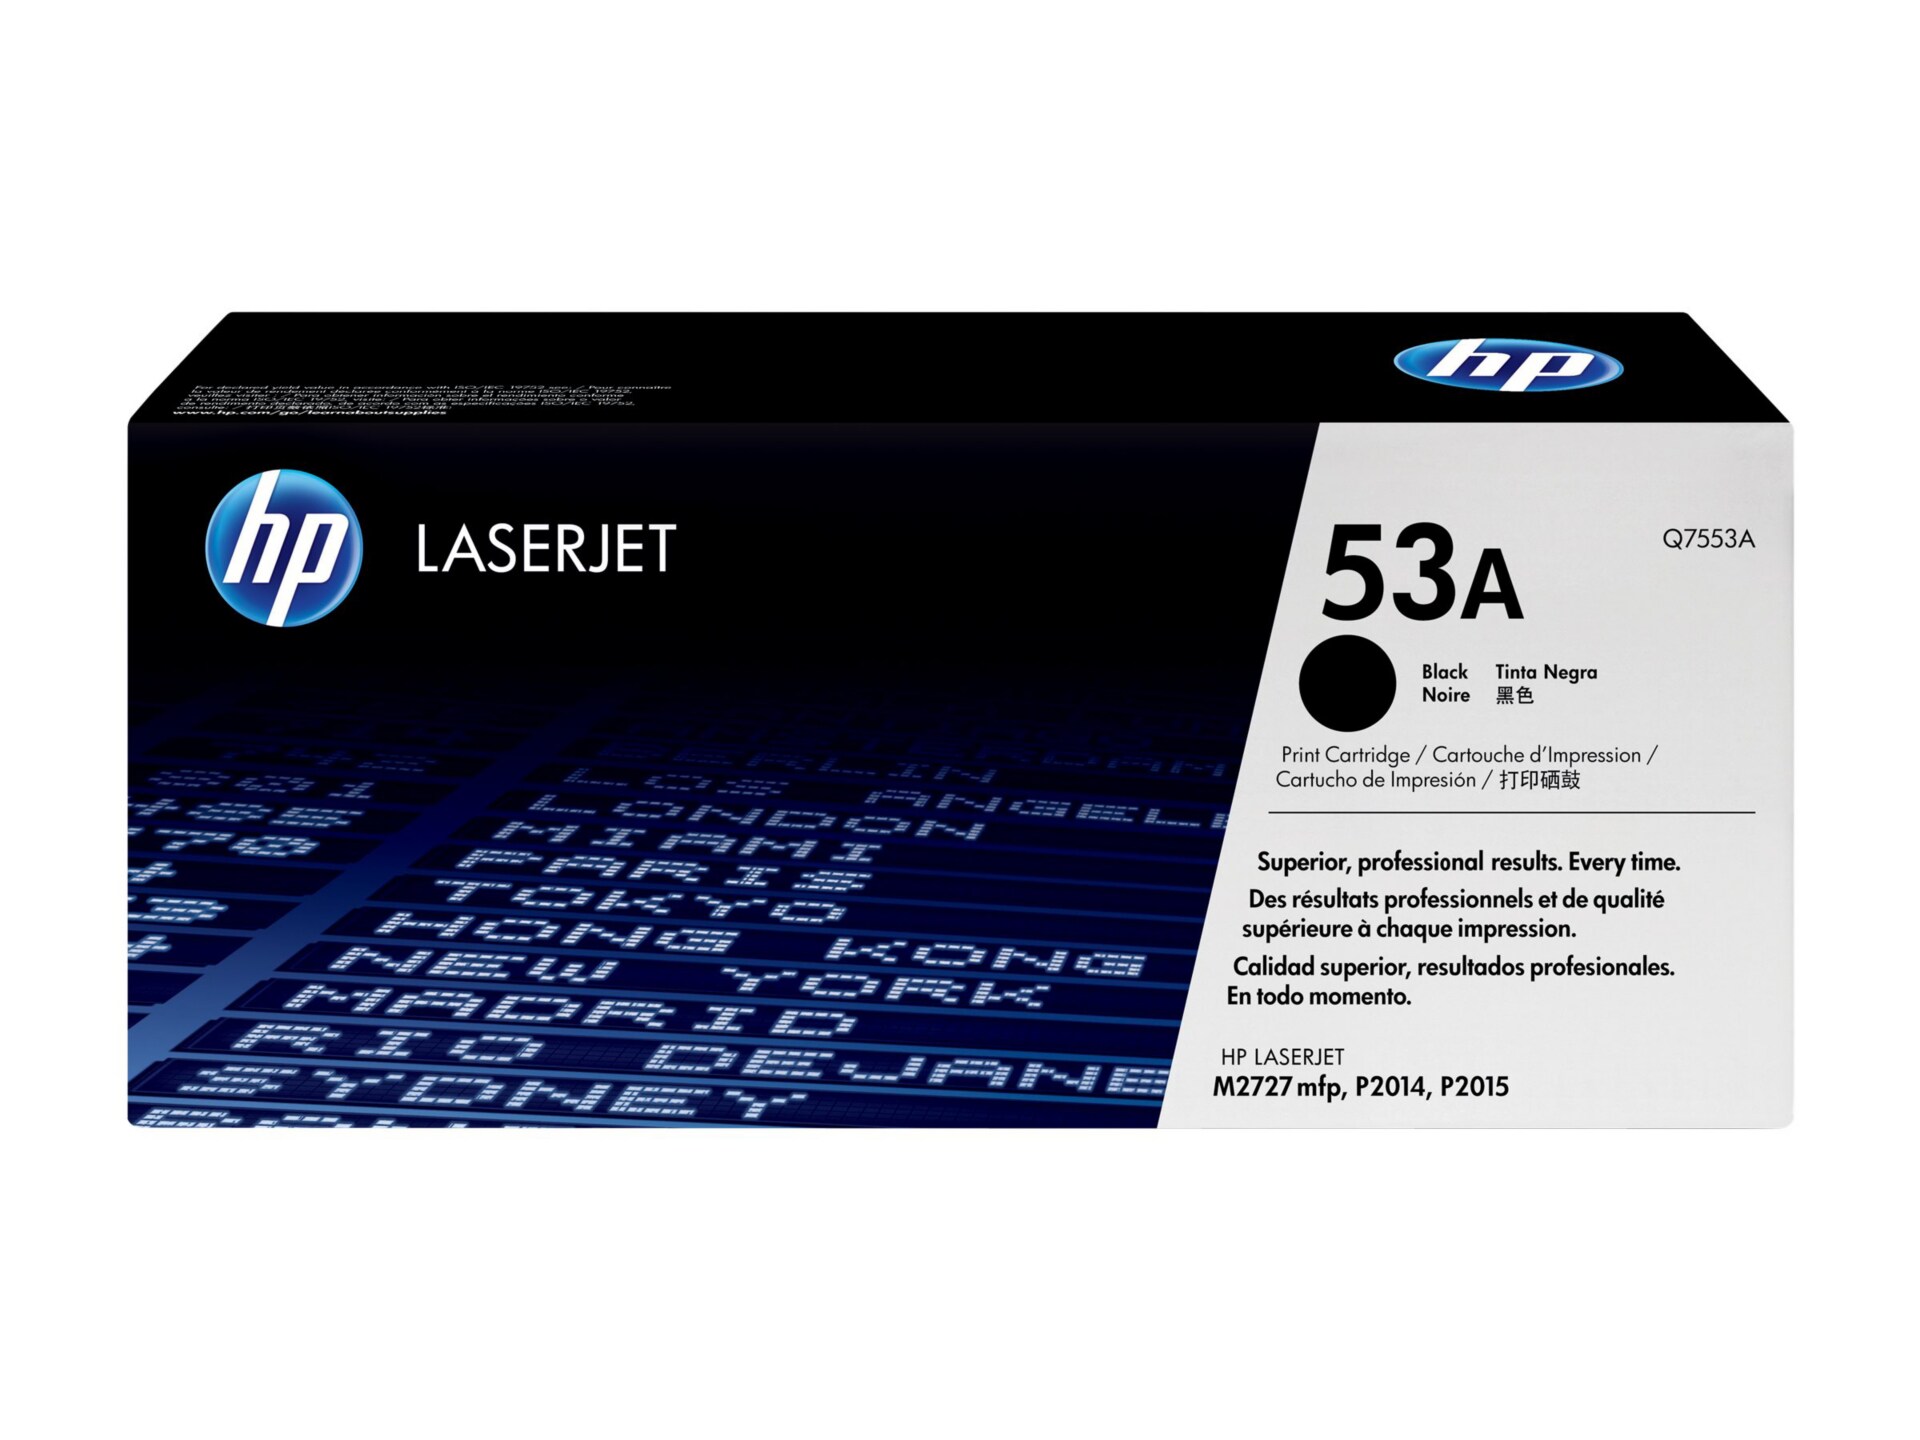 HP LaserJet 53A Black Toner Cartridge with Smart Printing Technology